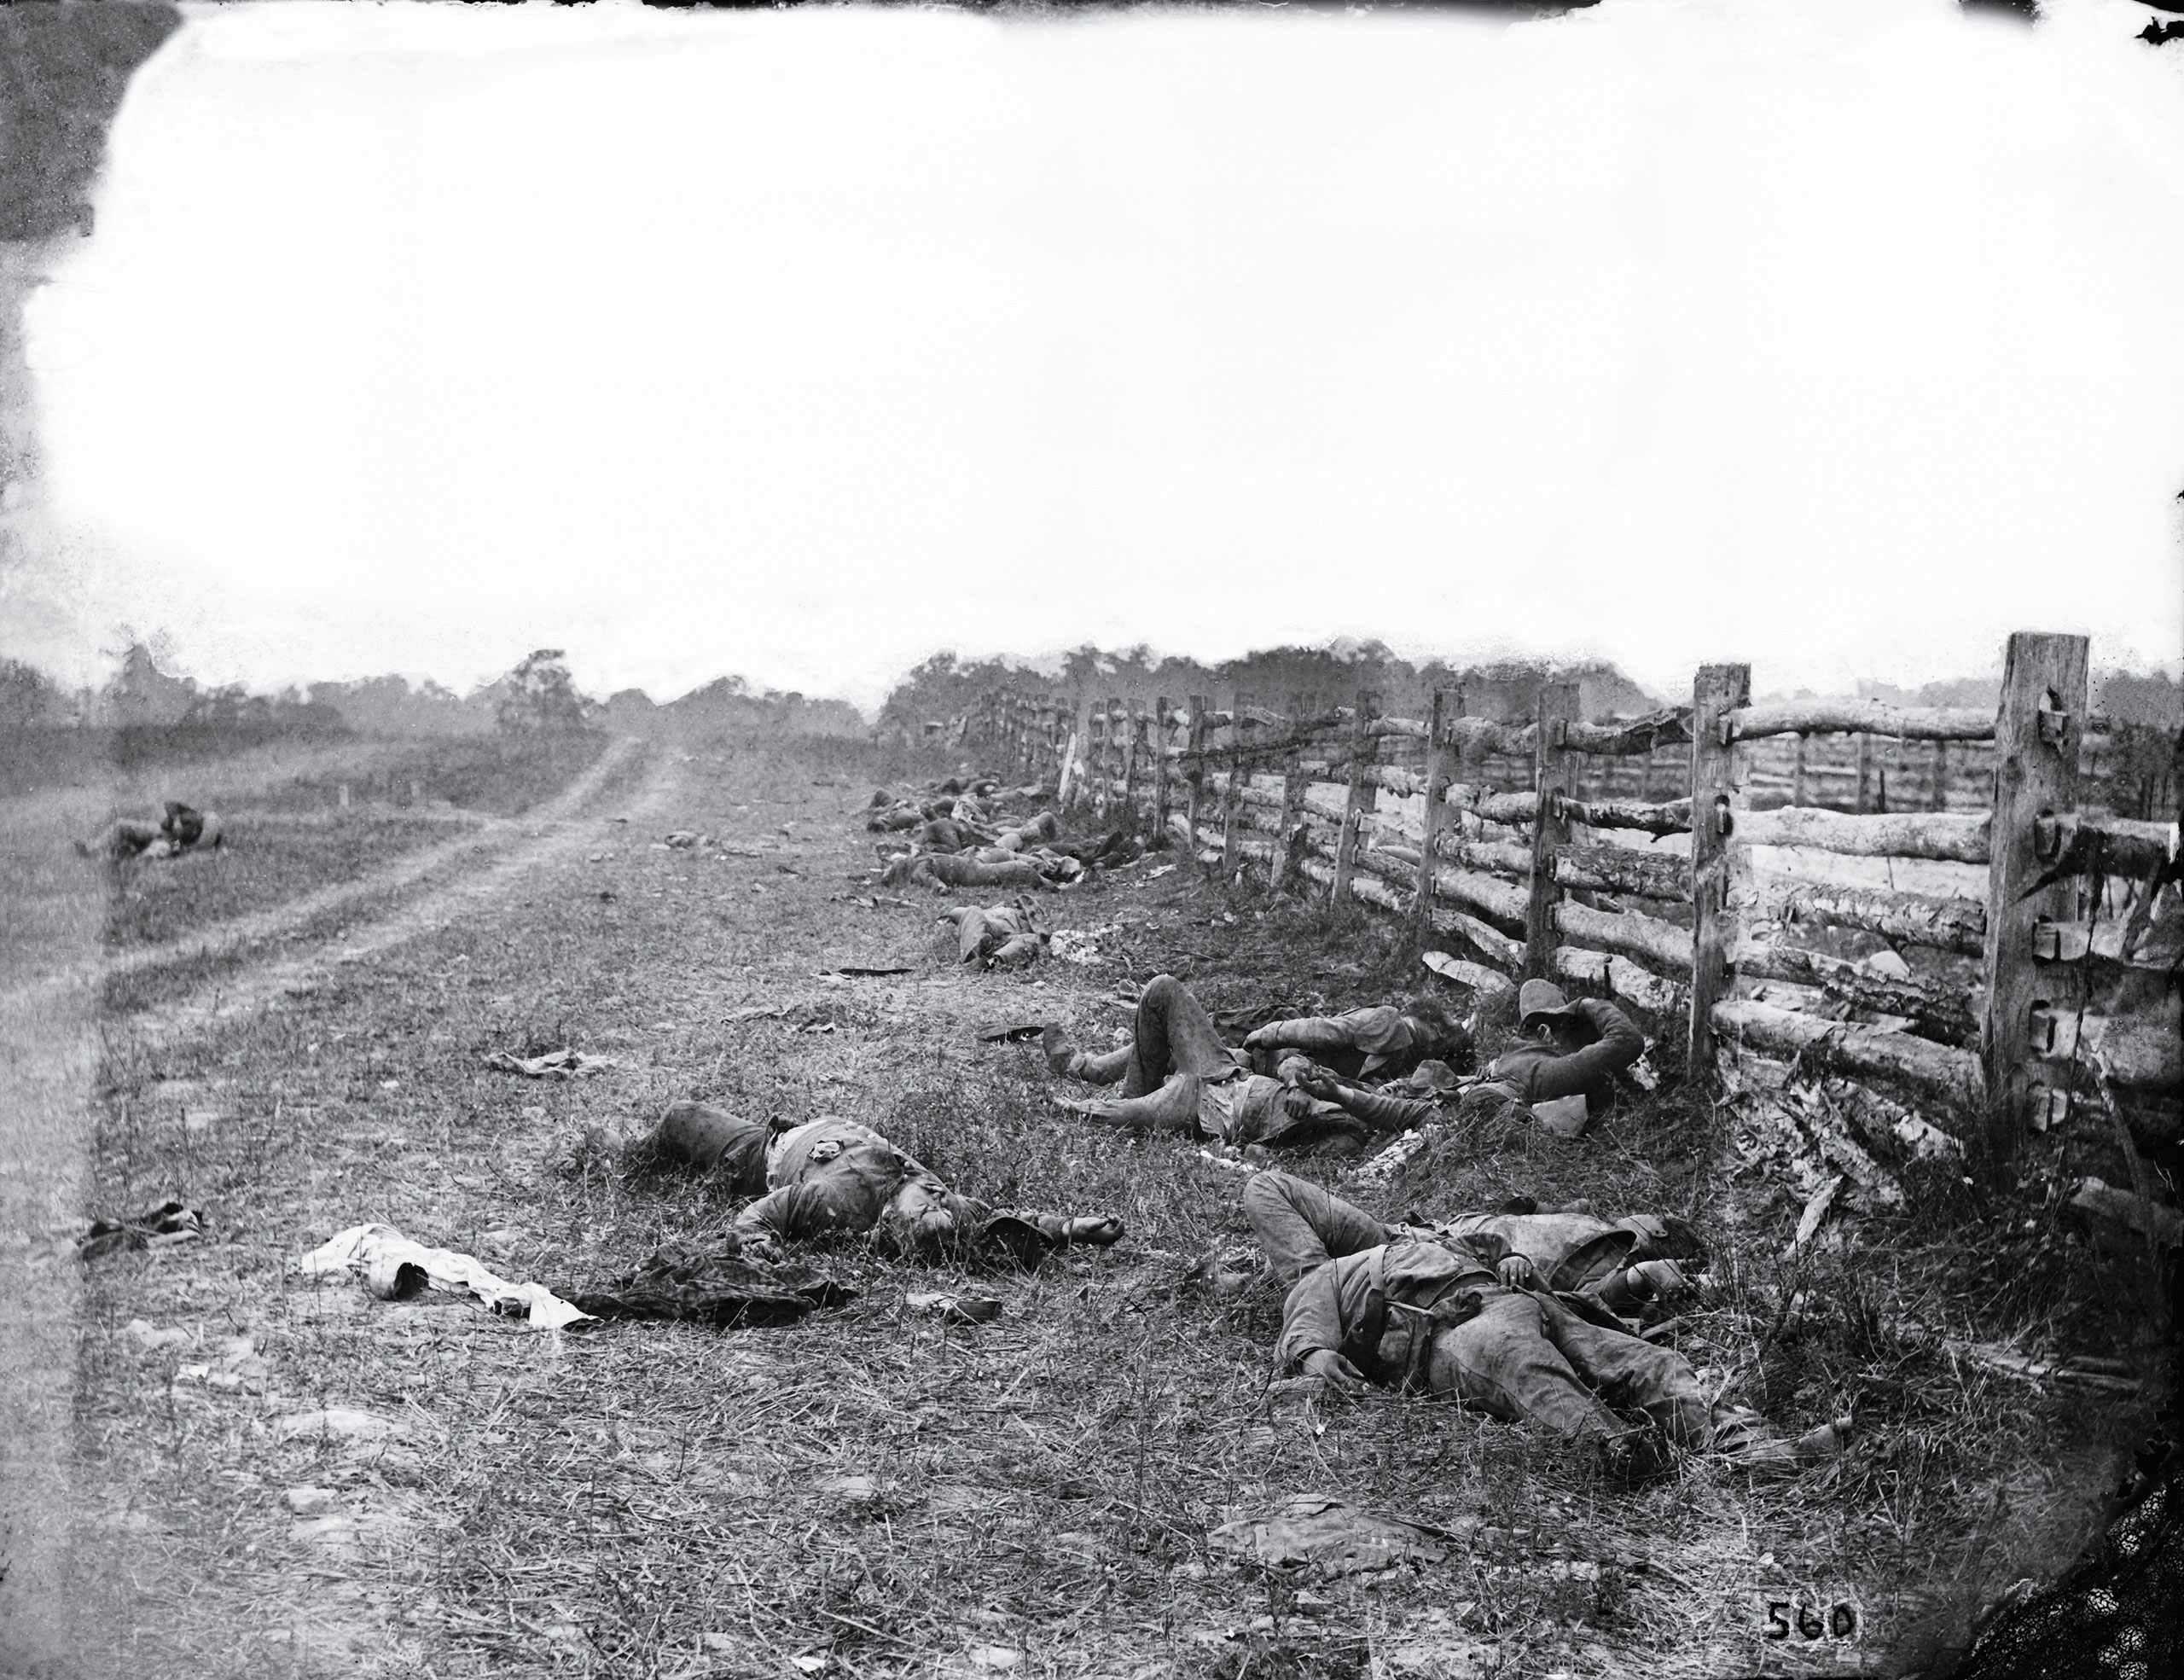 The Dead of Antietam by Alexander Gardner, 1862.